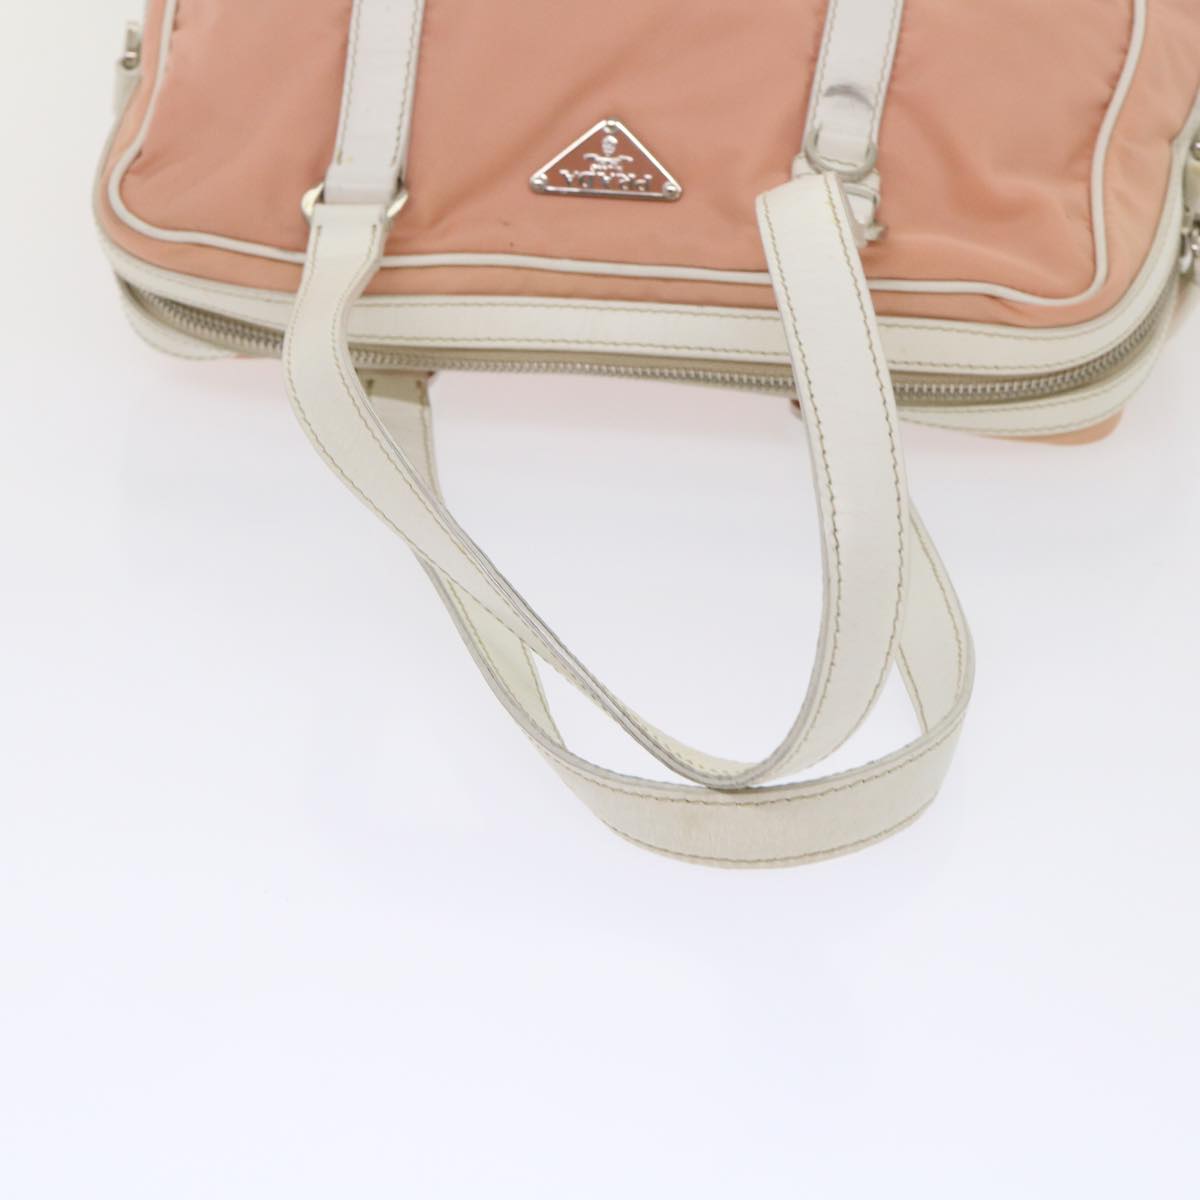 PRADA Hand Bag Nylon Leather Pink Auth 48453